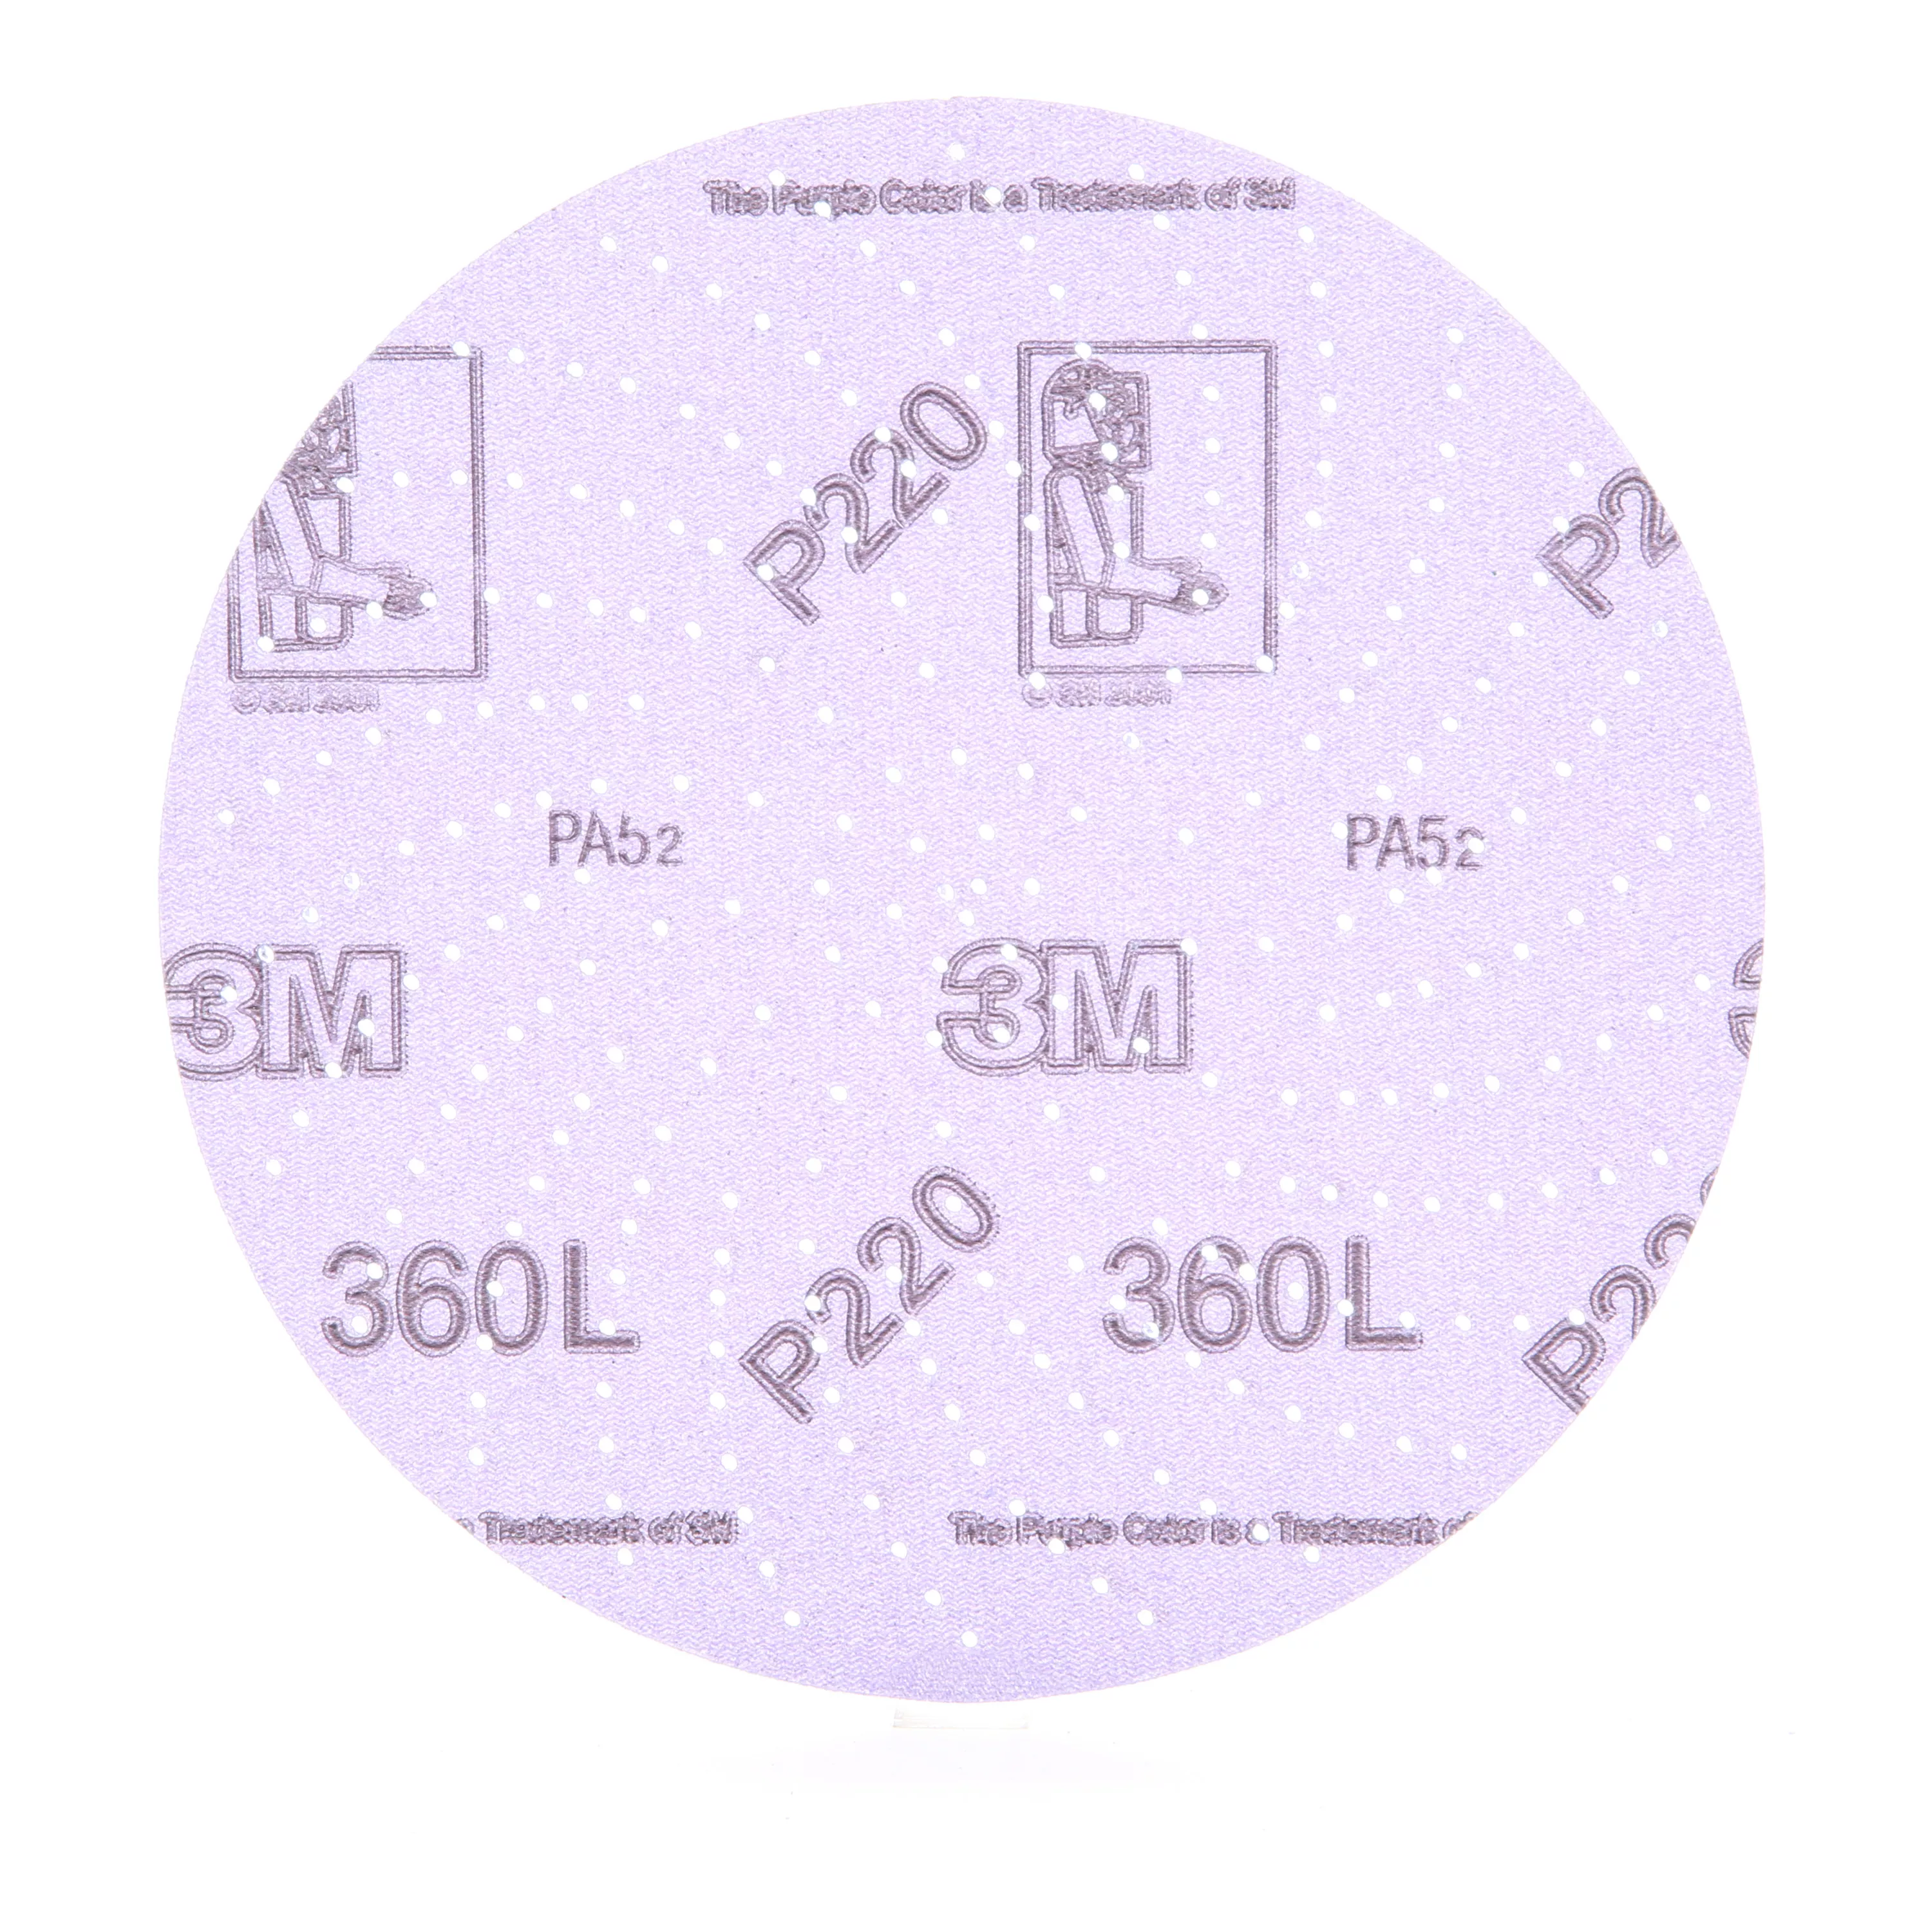 3M Xtract™ Film Disc 360L, P220 3MIL, 6 in, Die 600LG, 100/Carton, 500
ea/Case